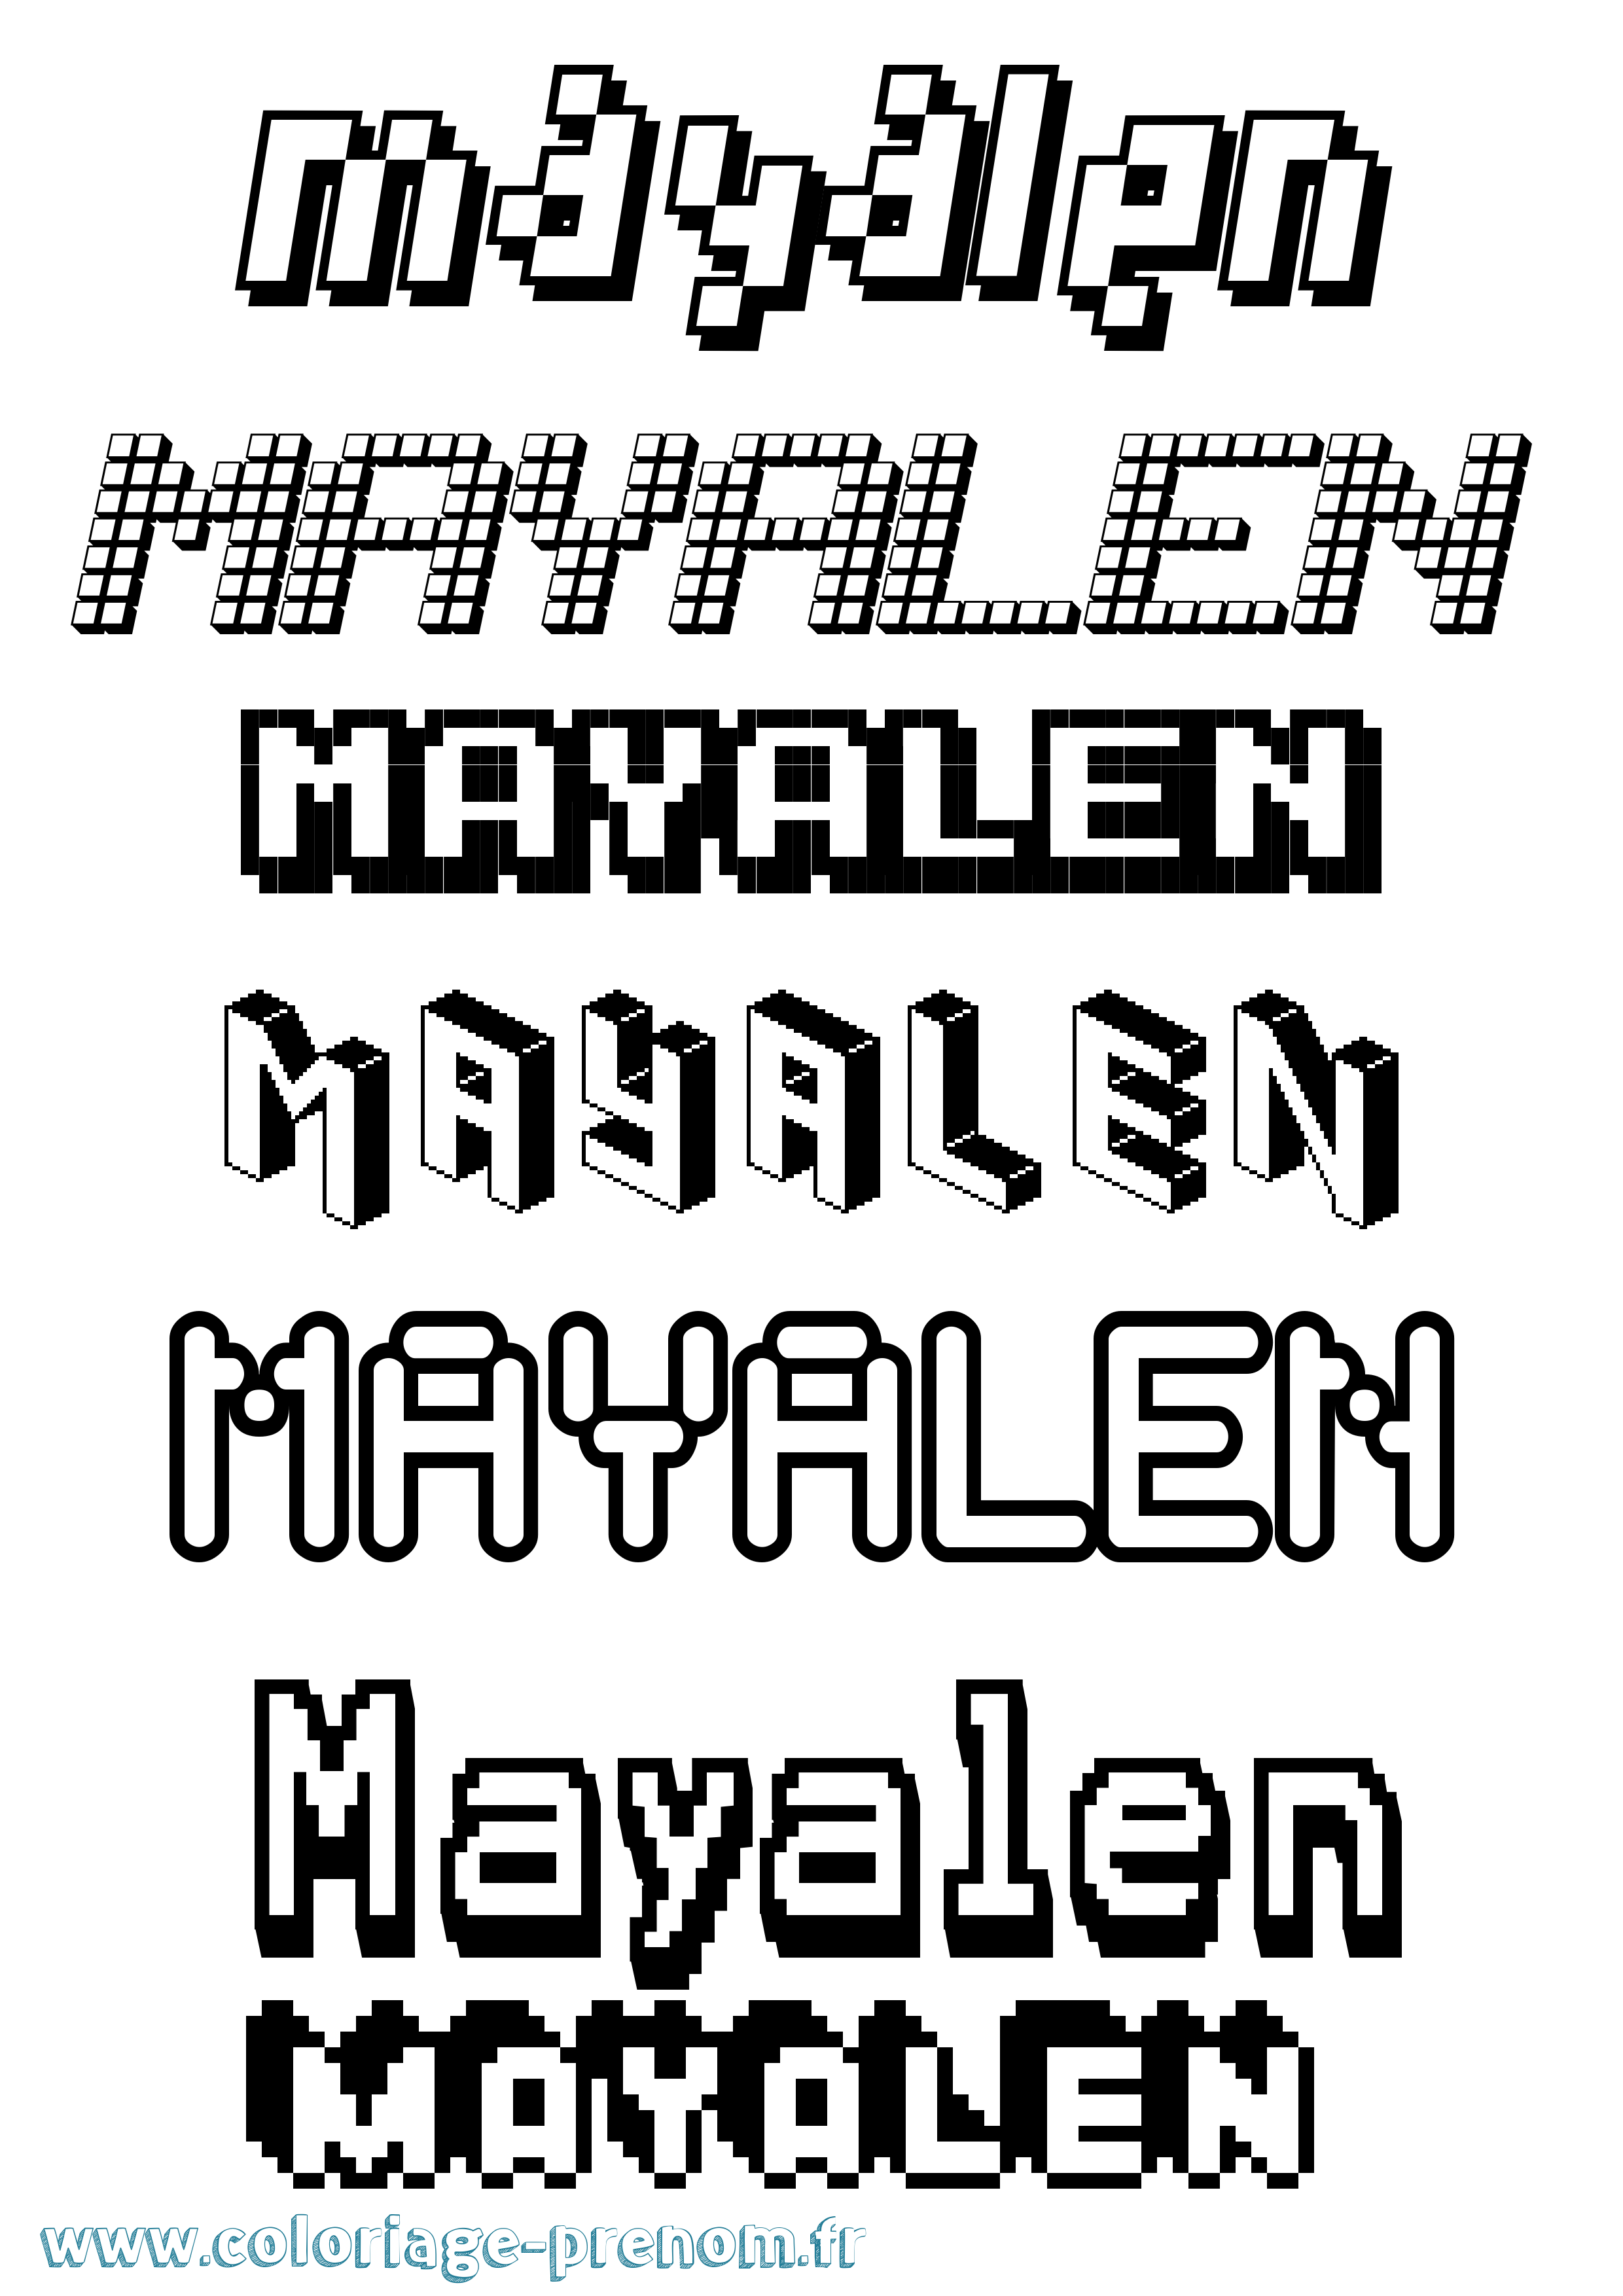 Coloriage prénom Mayalen Pixel